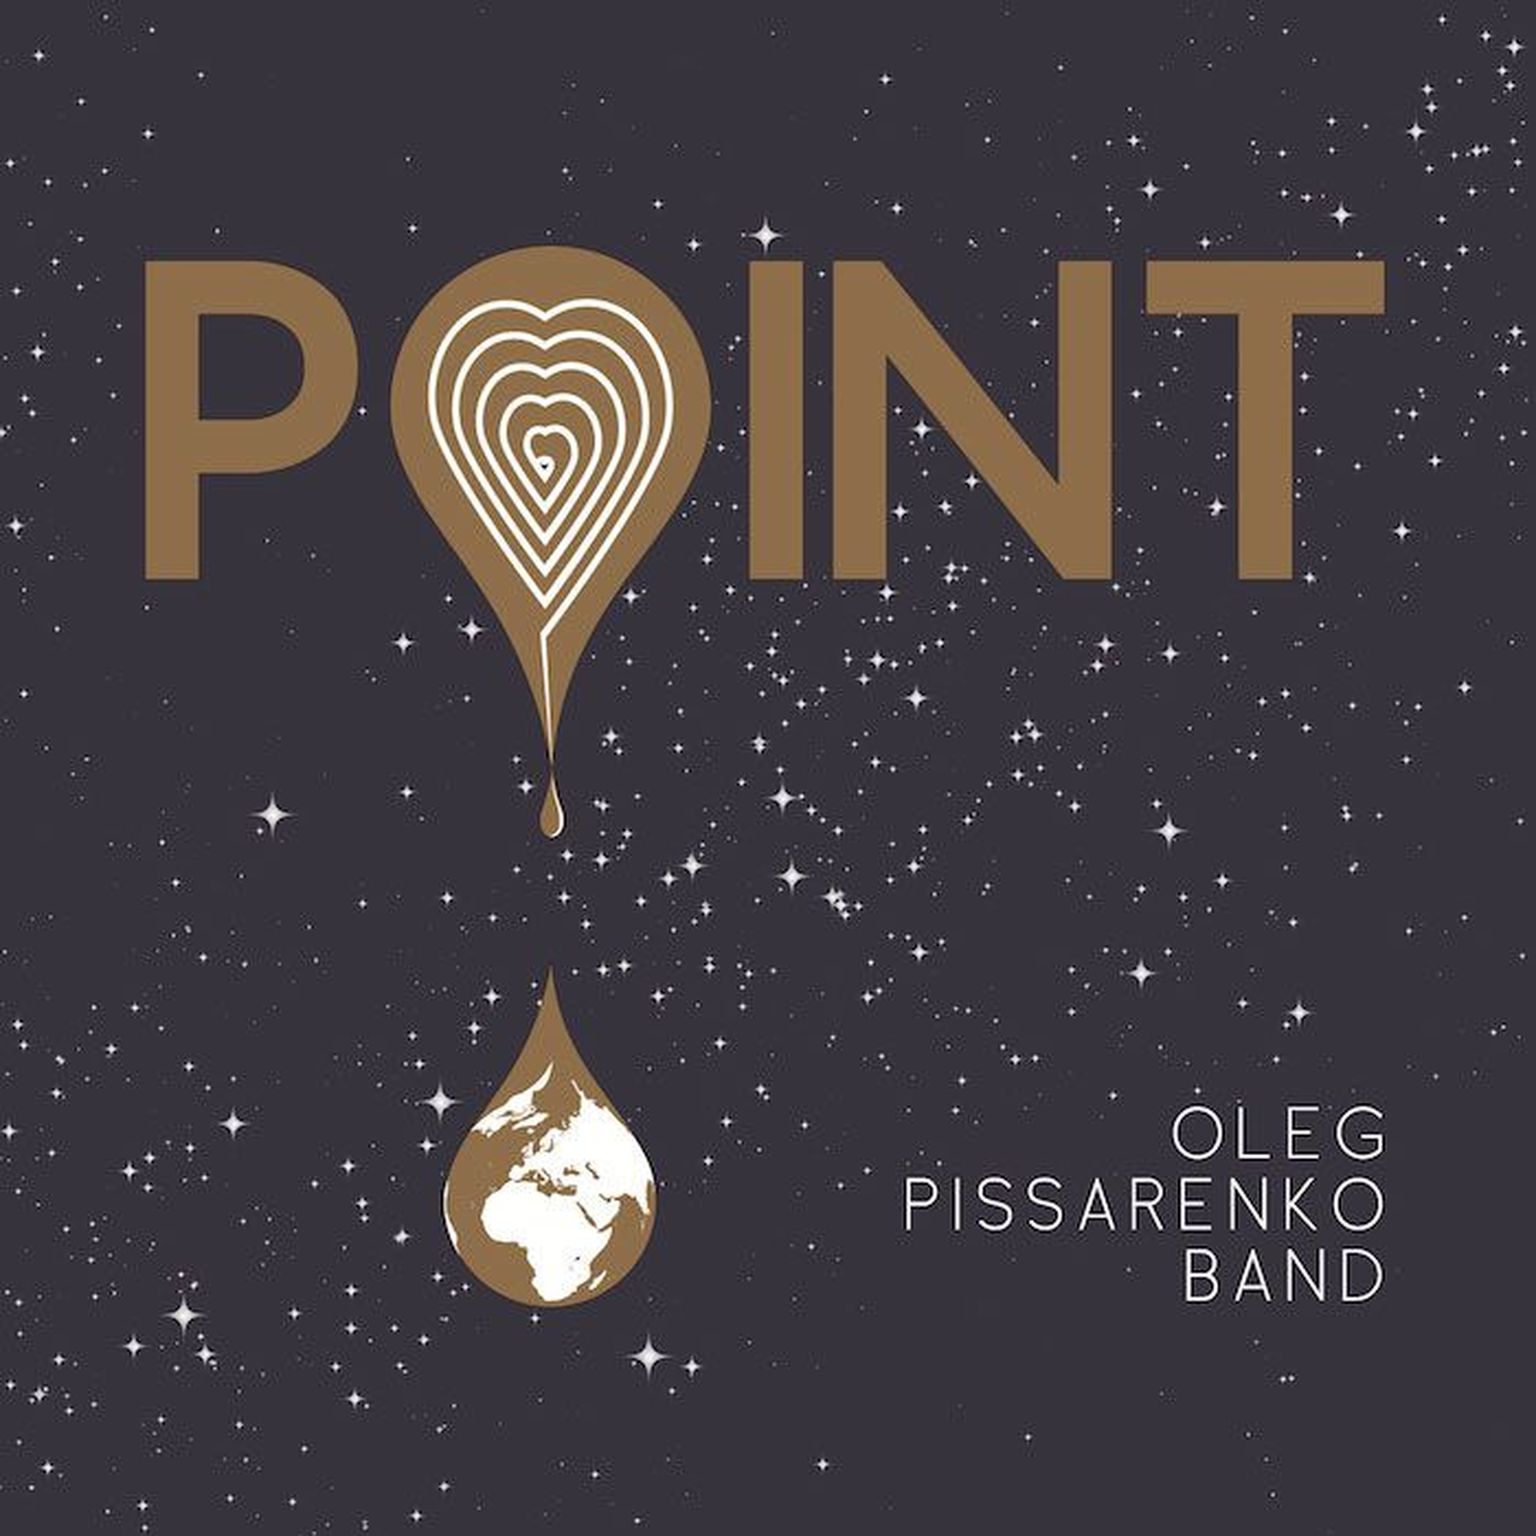 Oleg Pissarenko Band
«Point»
Pissarenko Productions